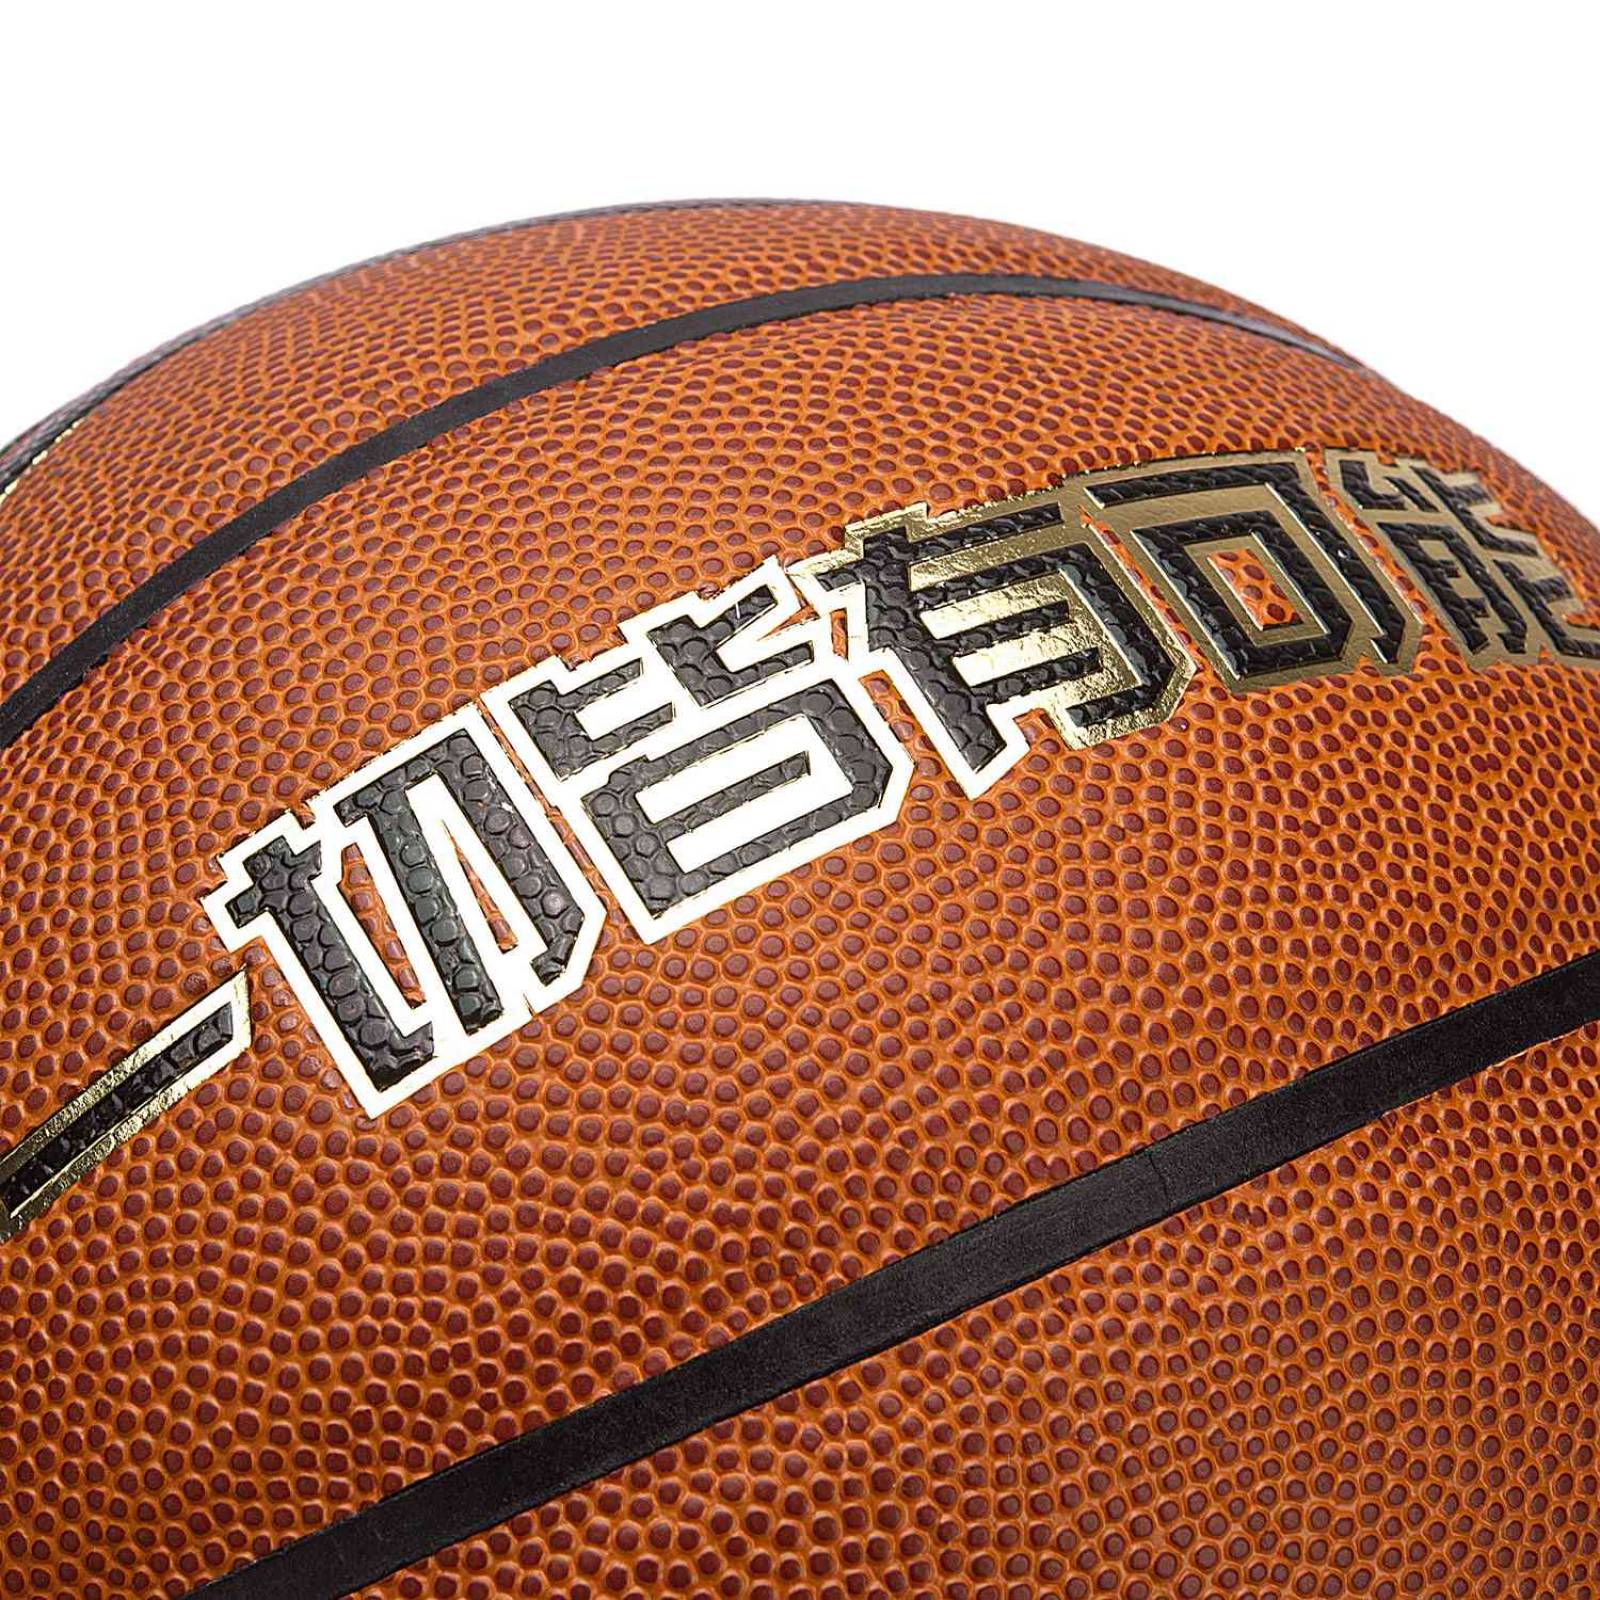 Balon de Basketball Li-Ning ABQN048-1 color Naranja Unisex